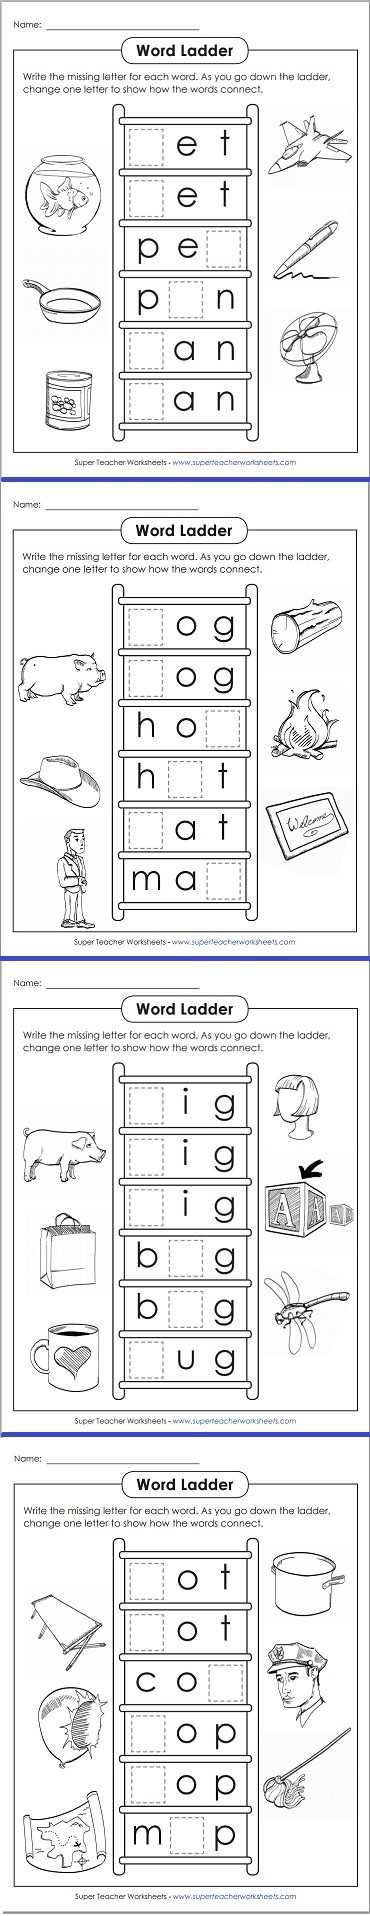 Word Ladder Worksheets for Middle School with Word Ladder Worksheets for Fourth Grade Choice Image Worksheet